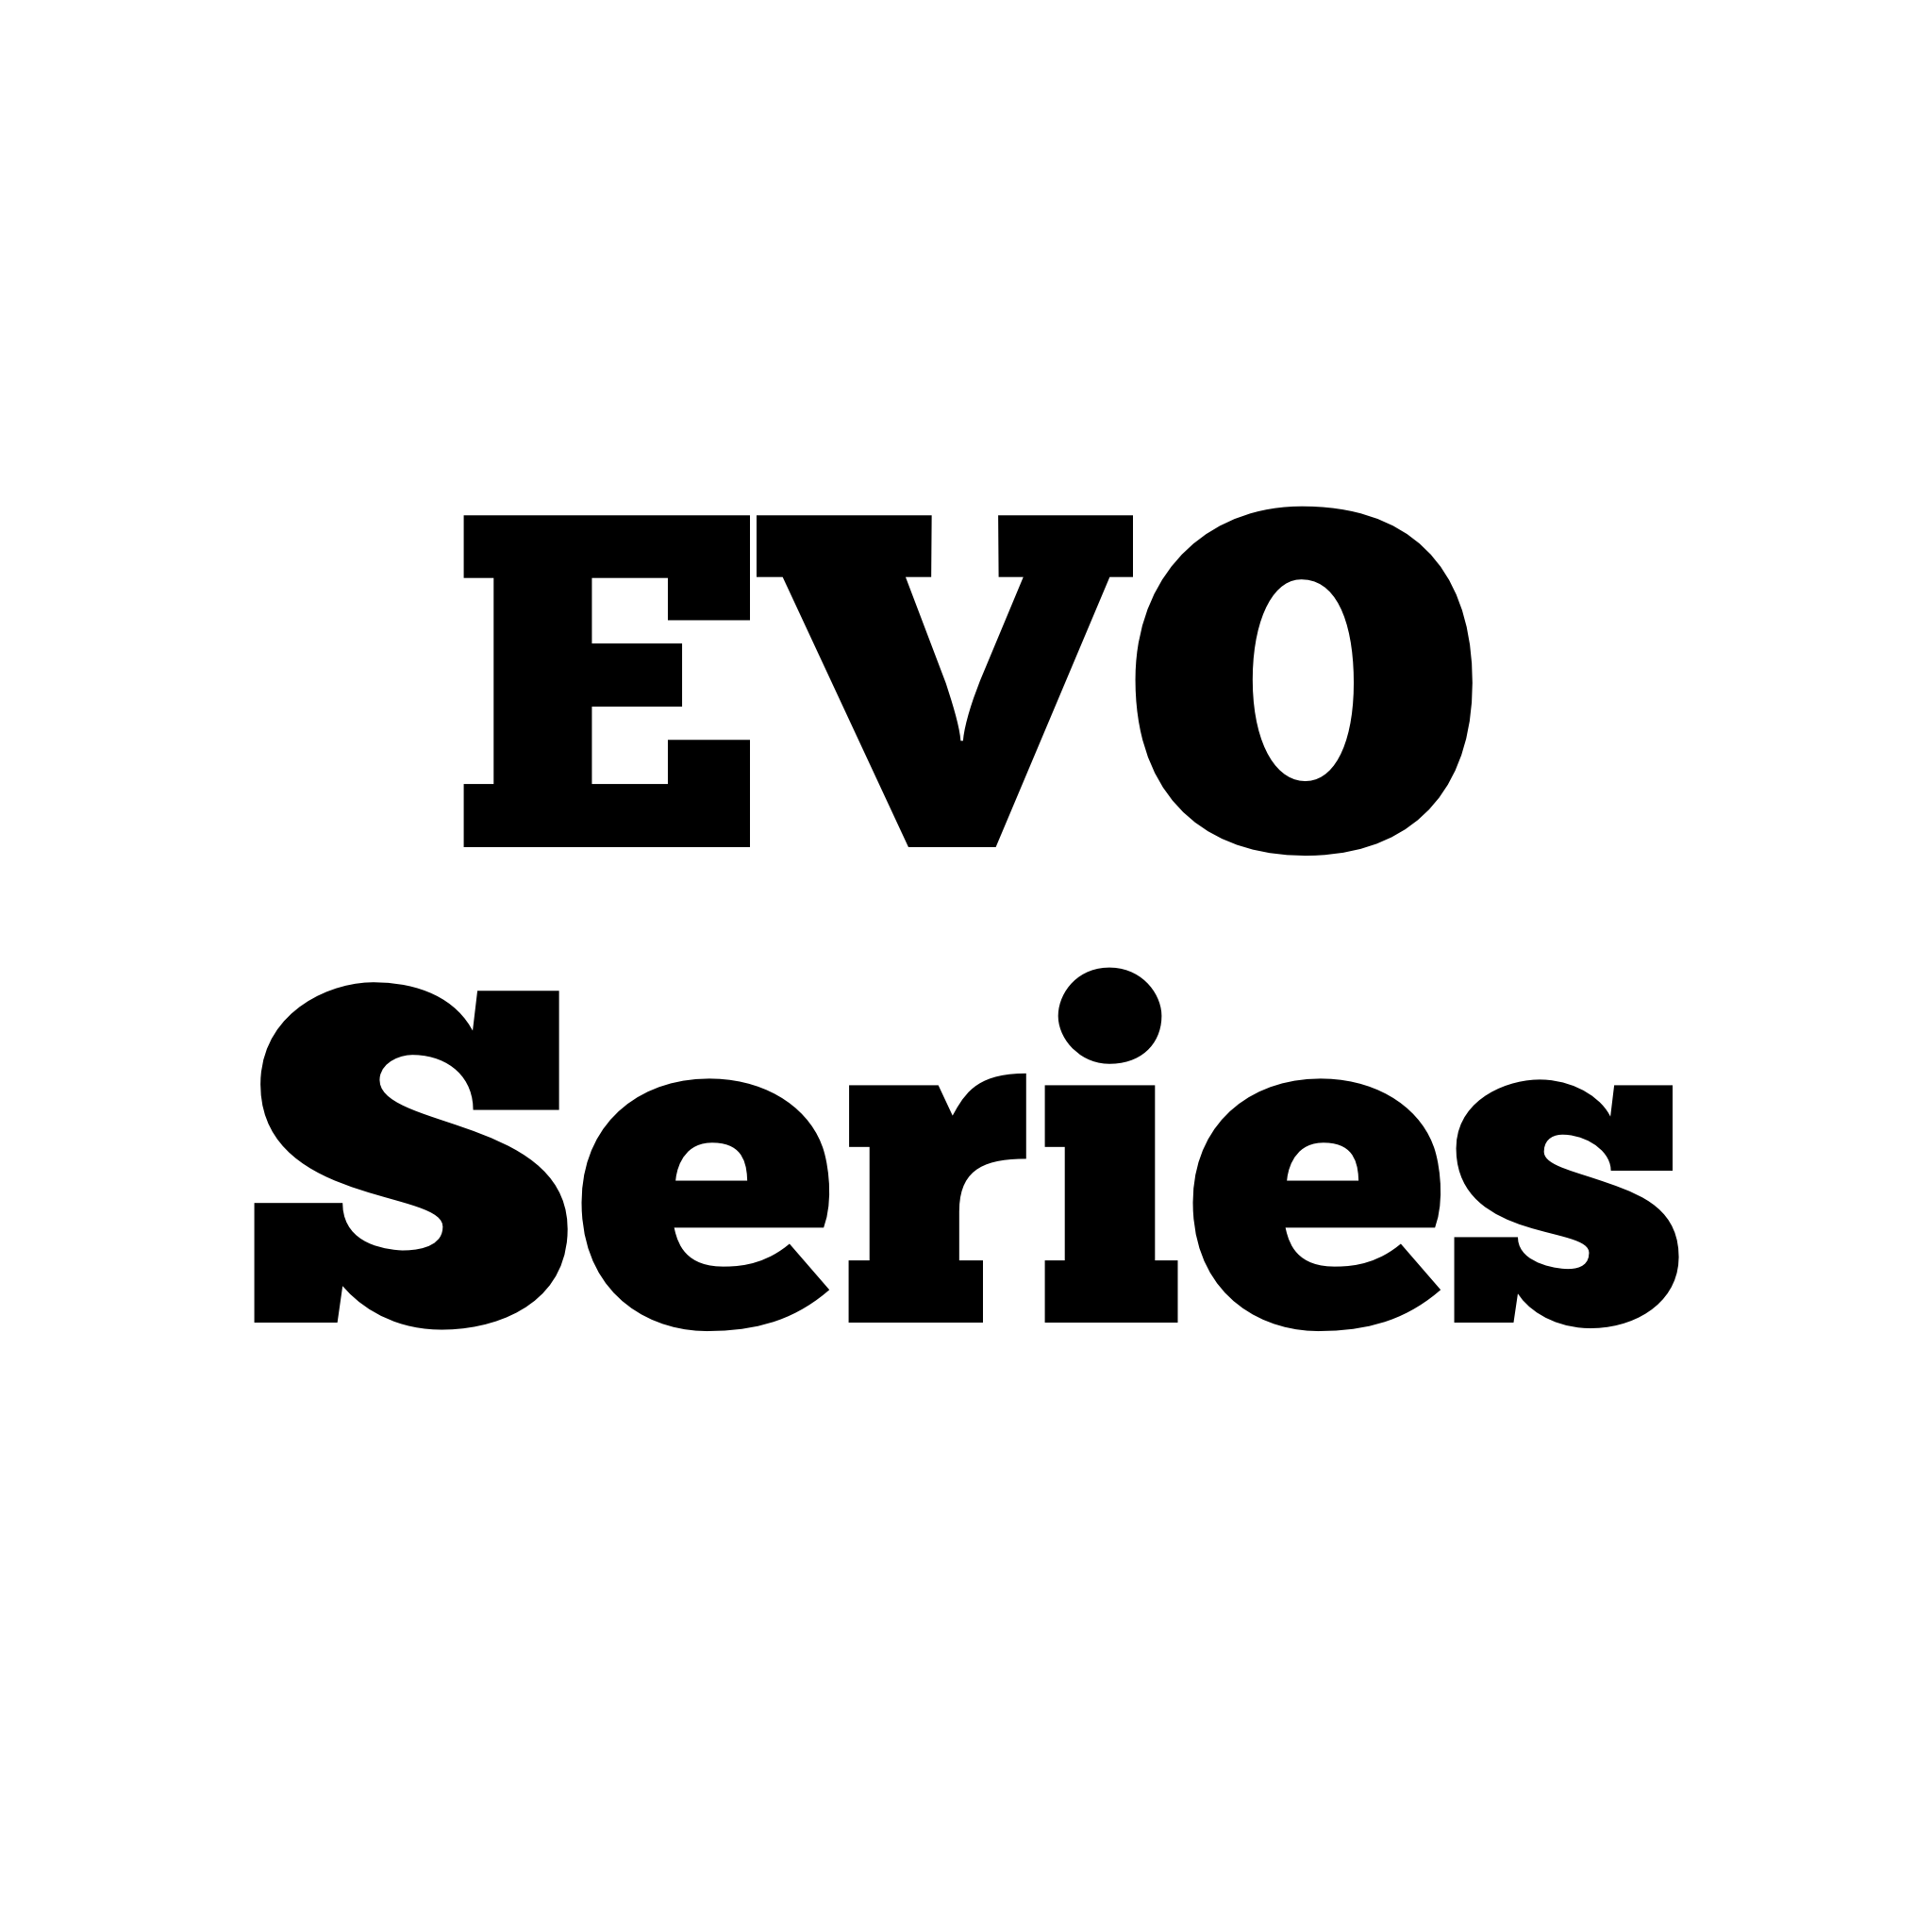 EVO Series